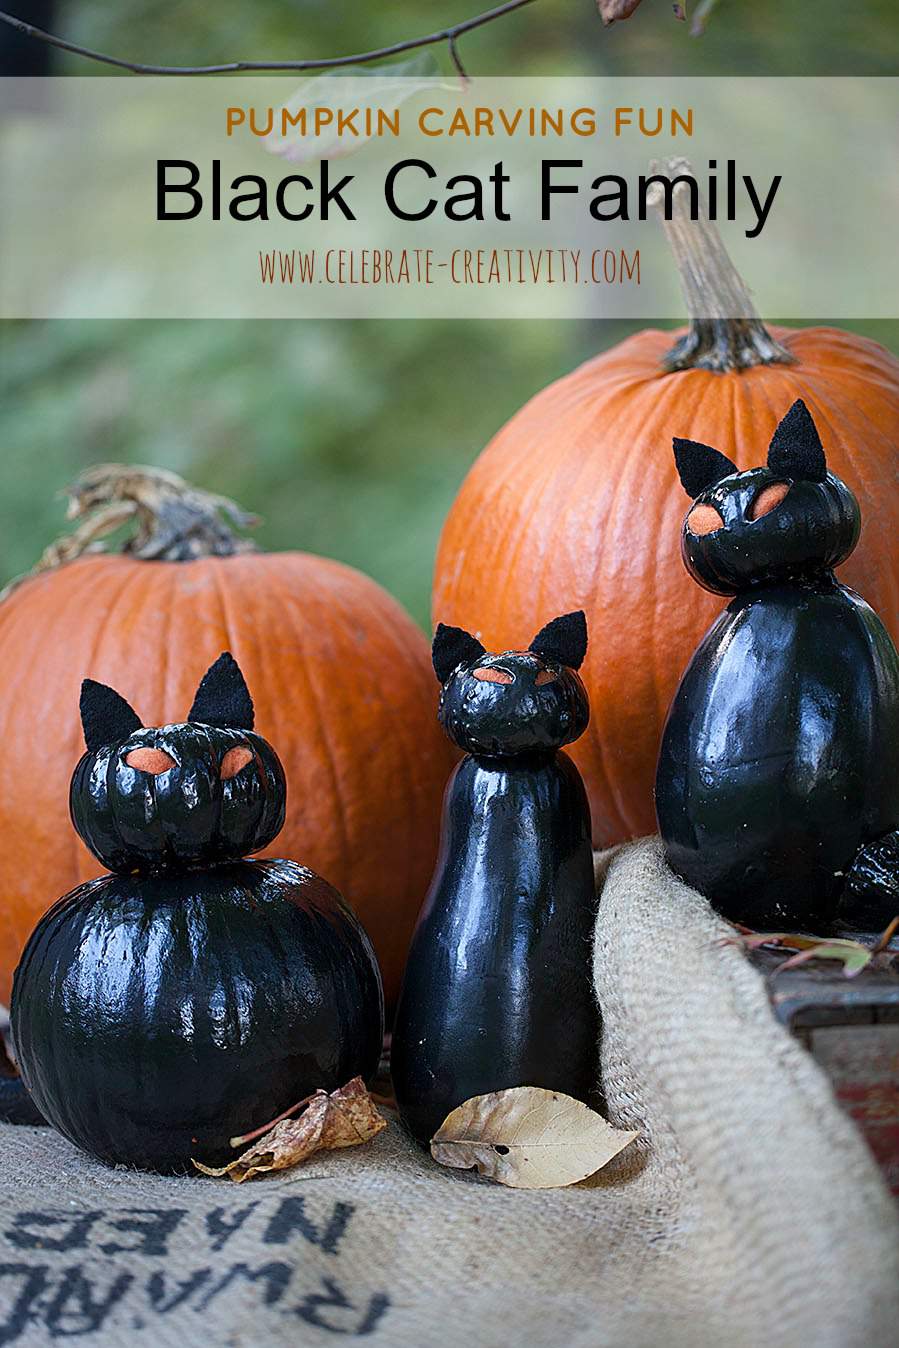 Pumpkin Carving Black Cat Family - Celebrate Creativity